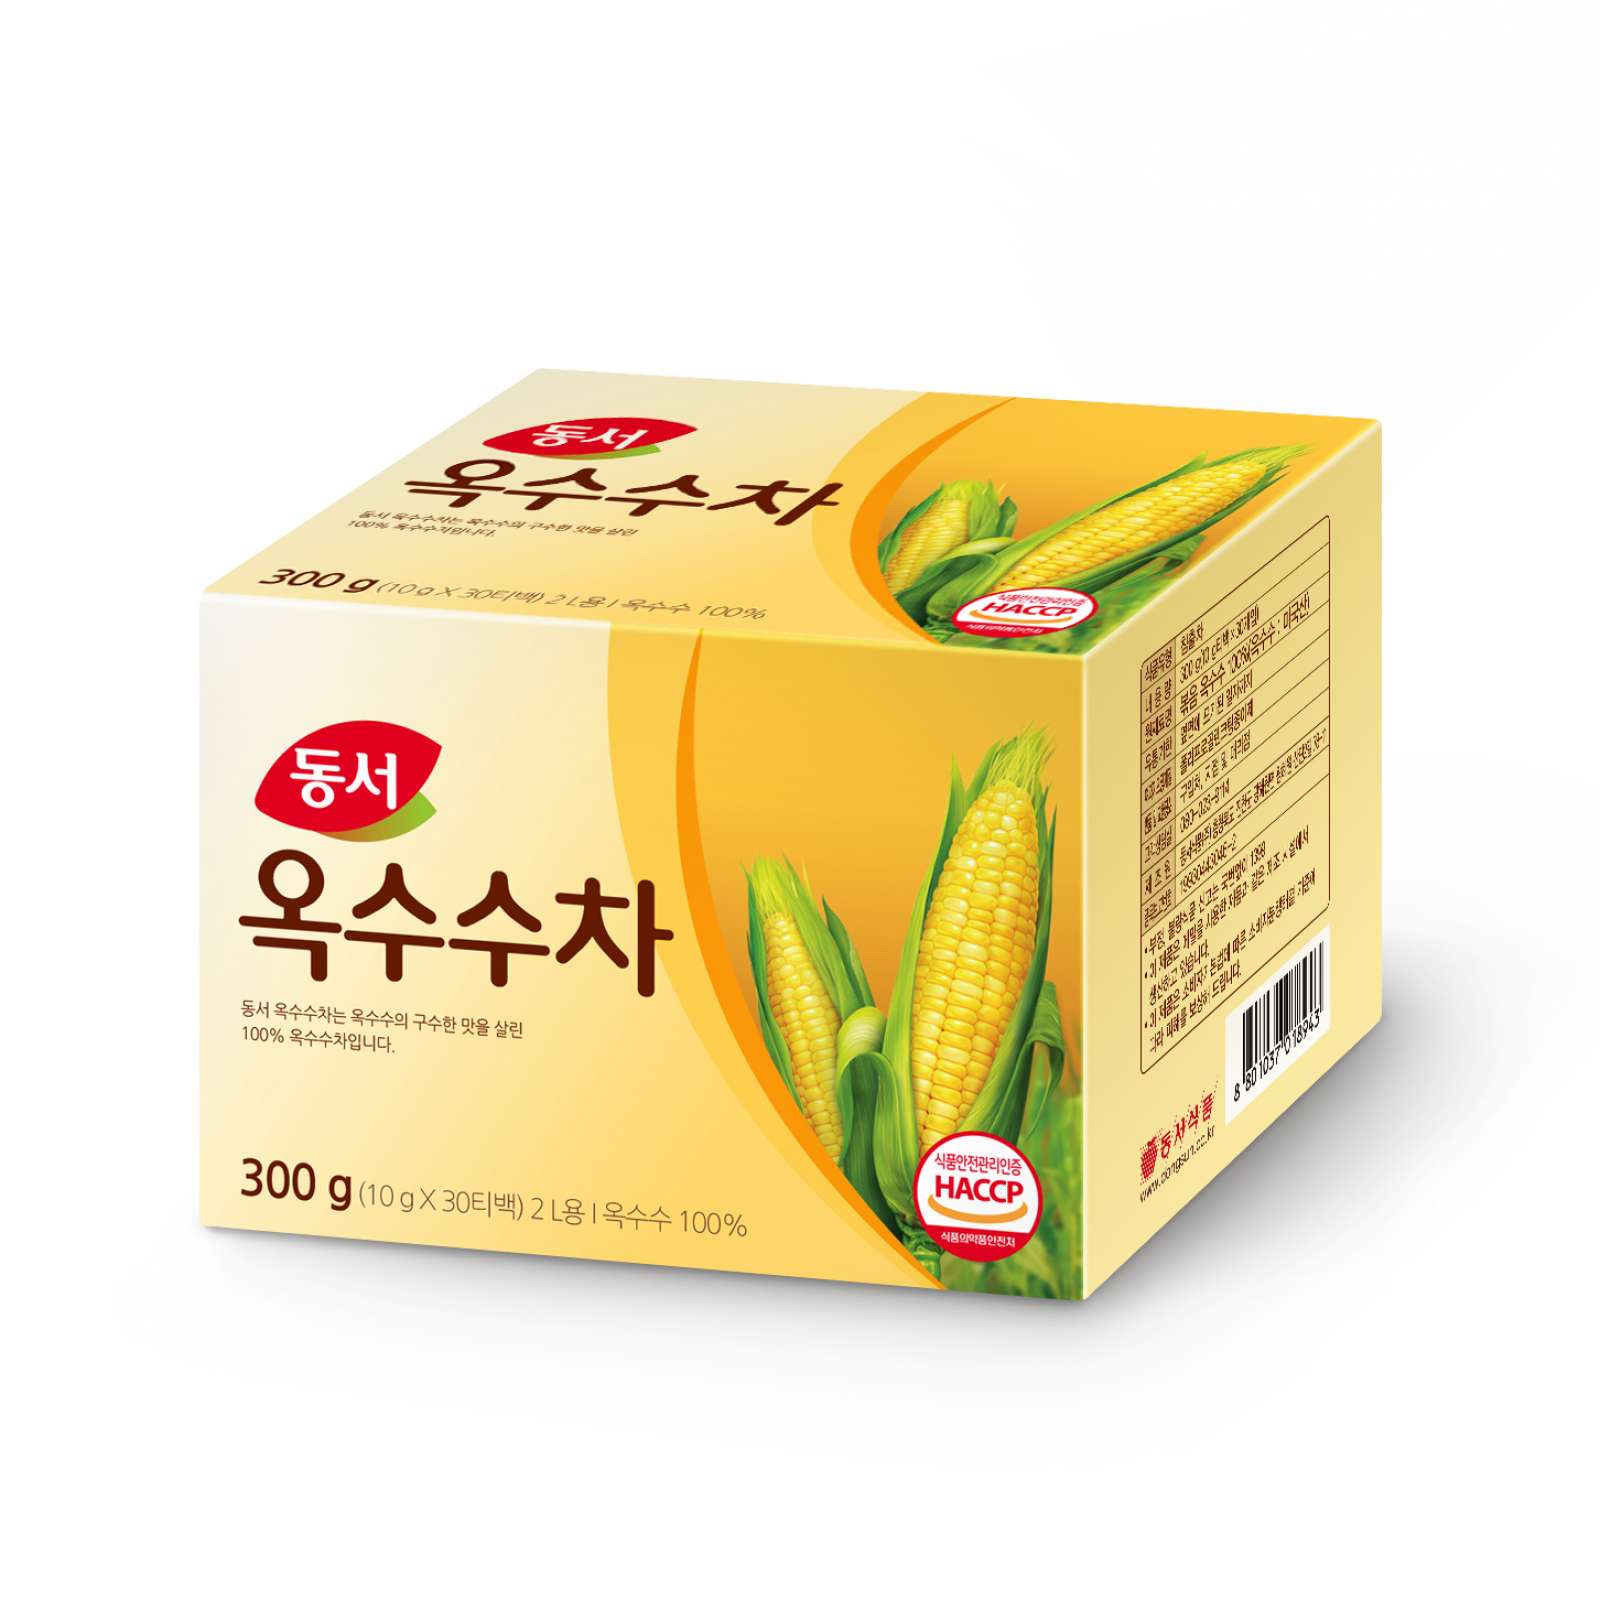 Кукурузный чай Dong Suh «Оксусу ча» 30 пакетиков. 